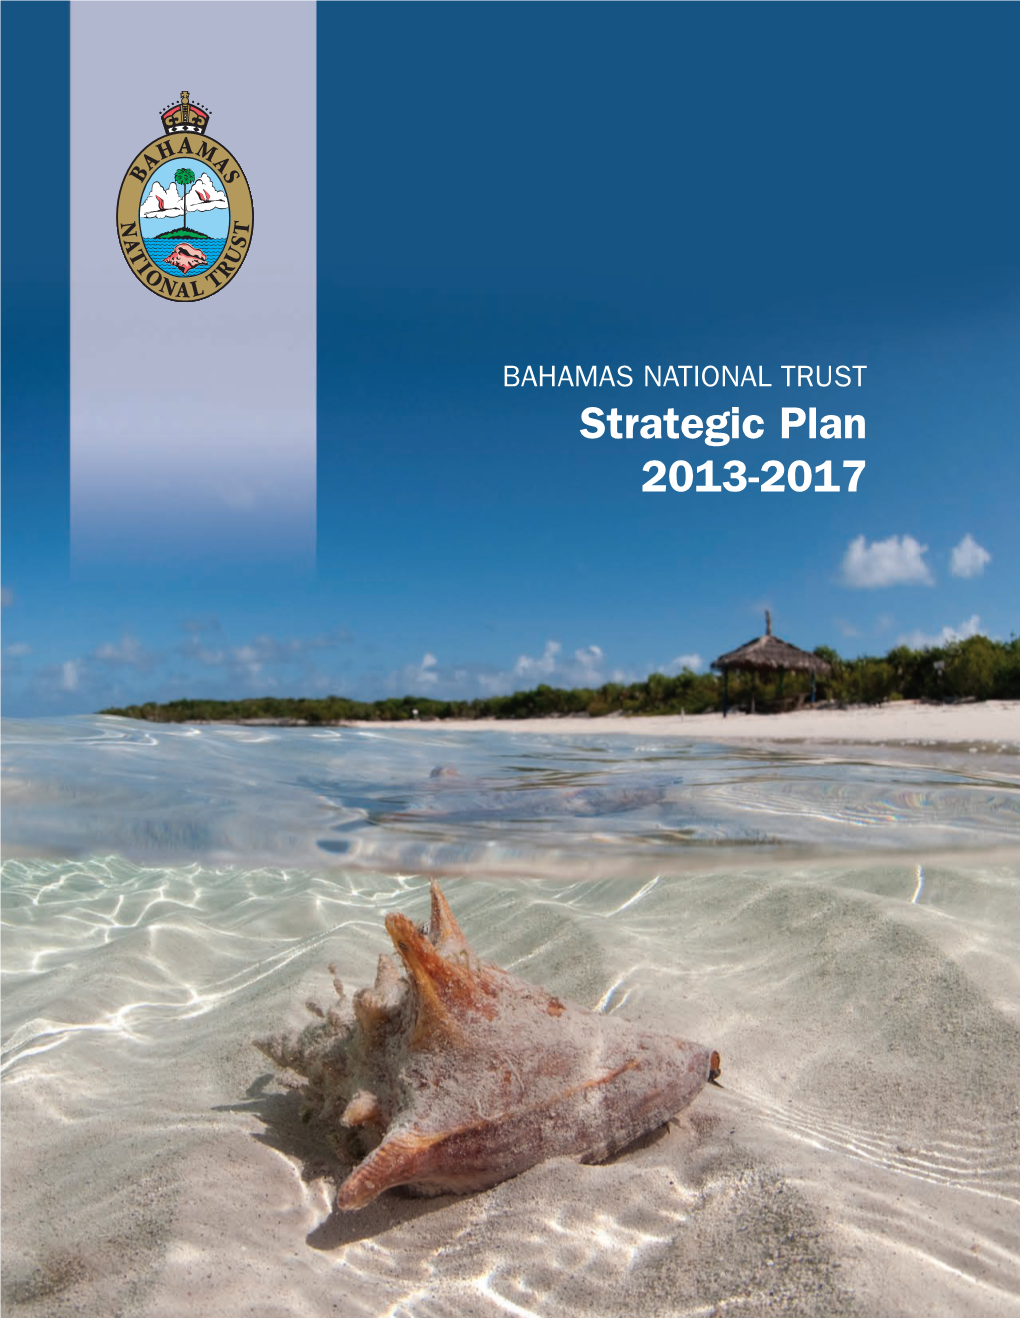 BAHAMAS NATIONAL TRUST Strategic Plan 2013-2017